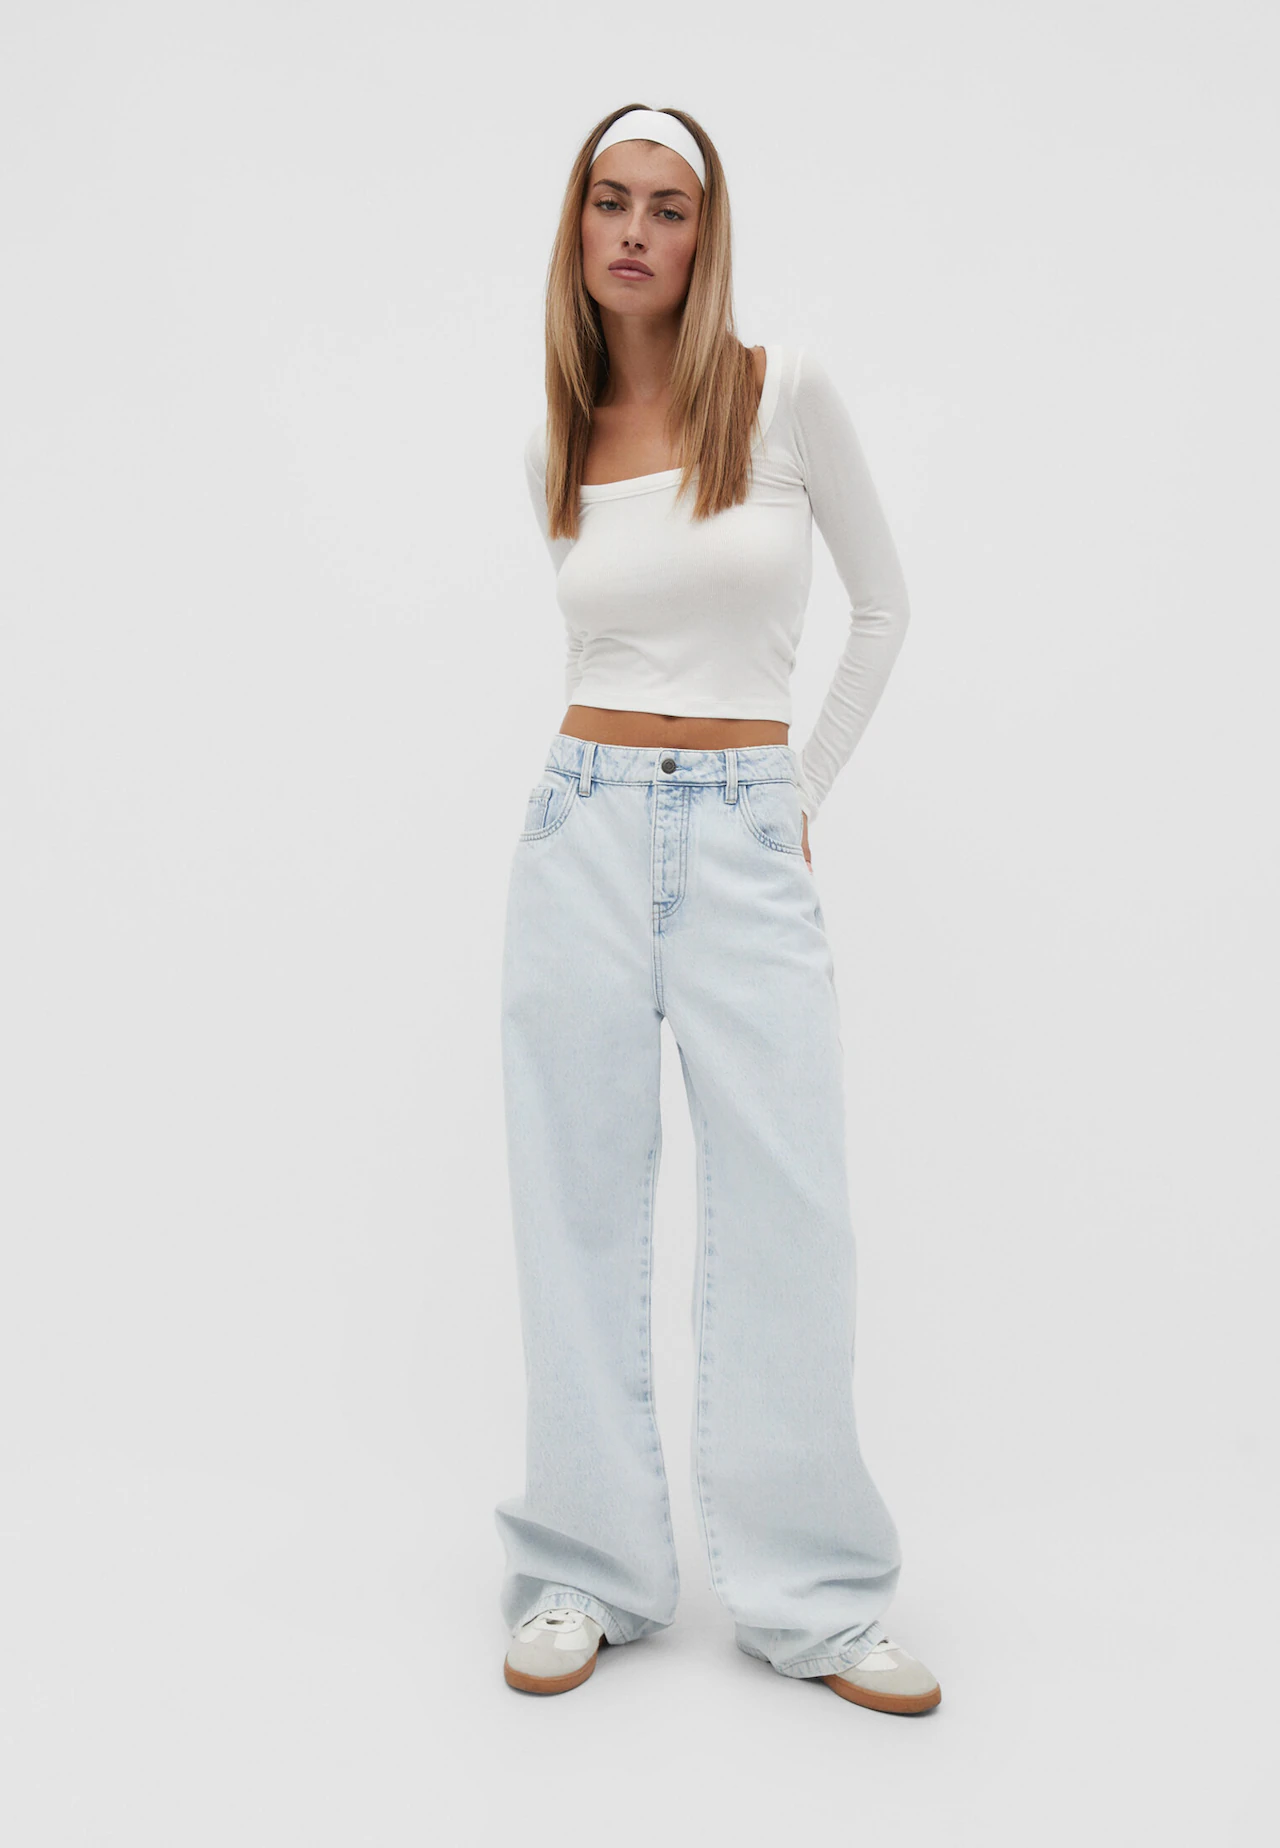 Baggy jeans - Women's fashion